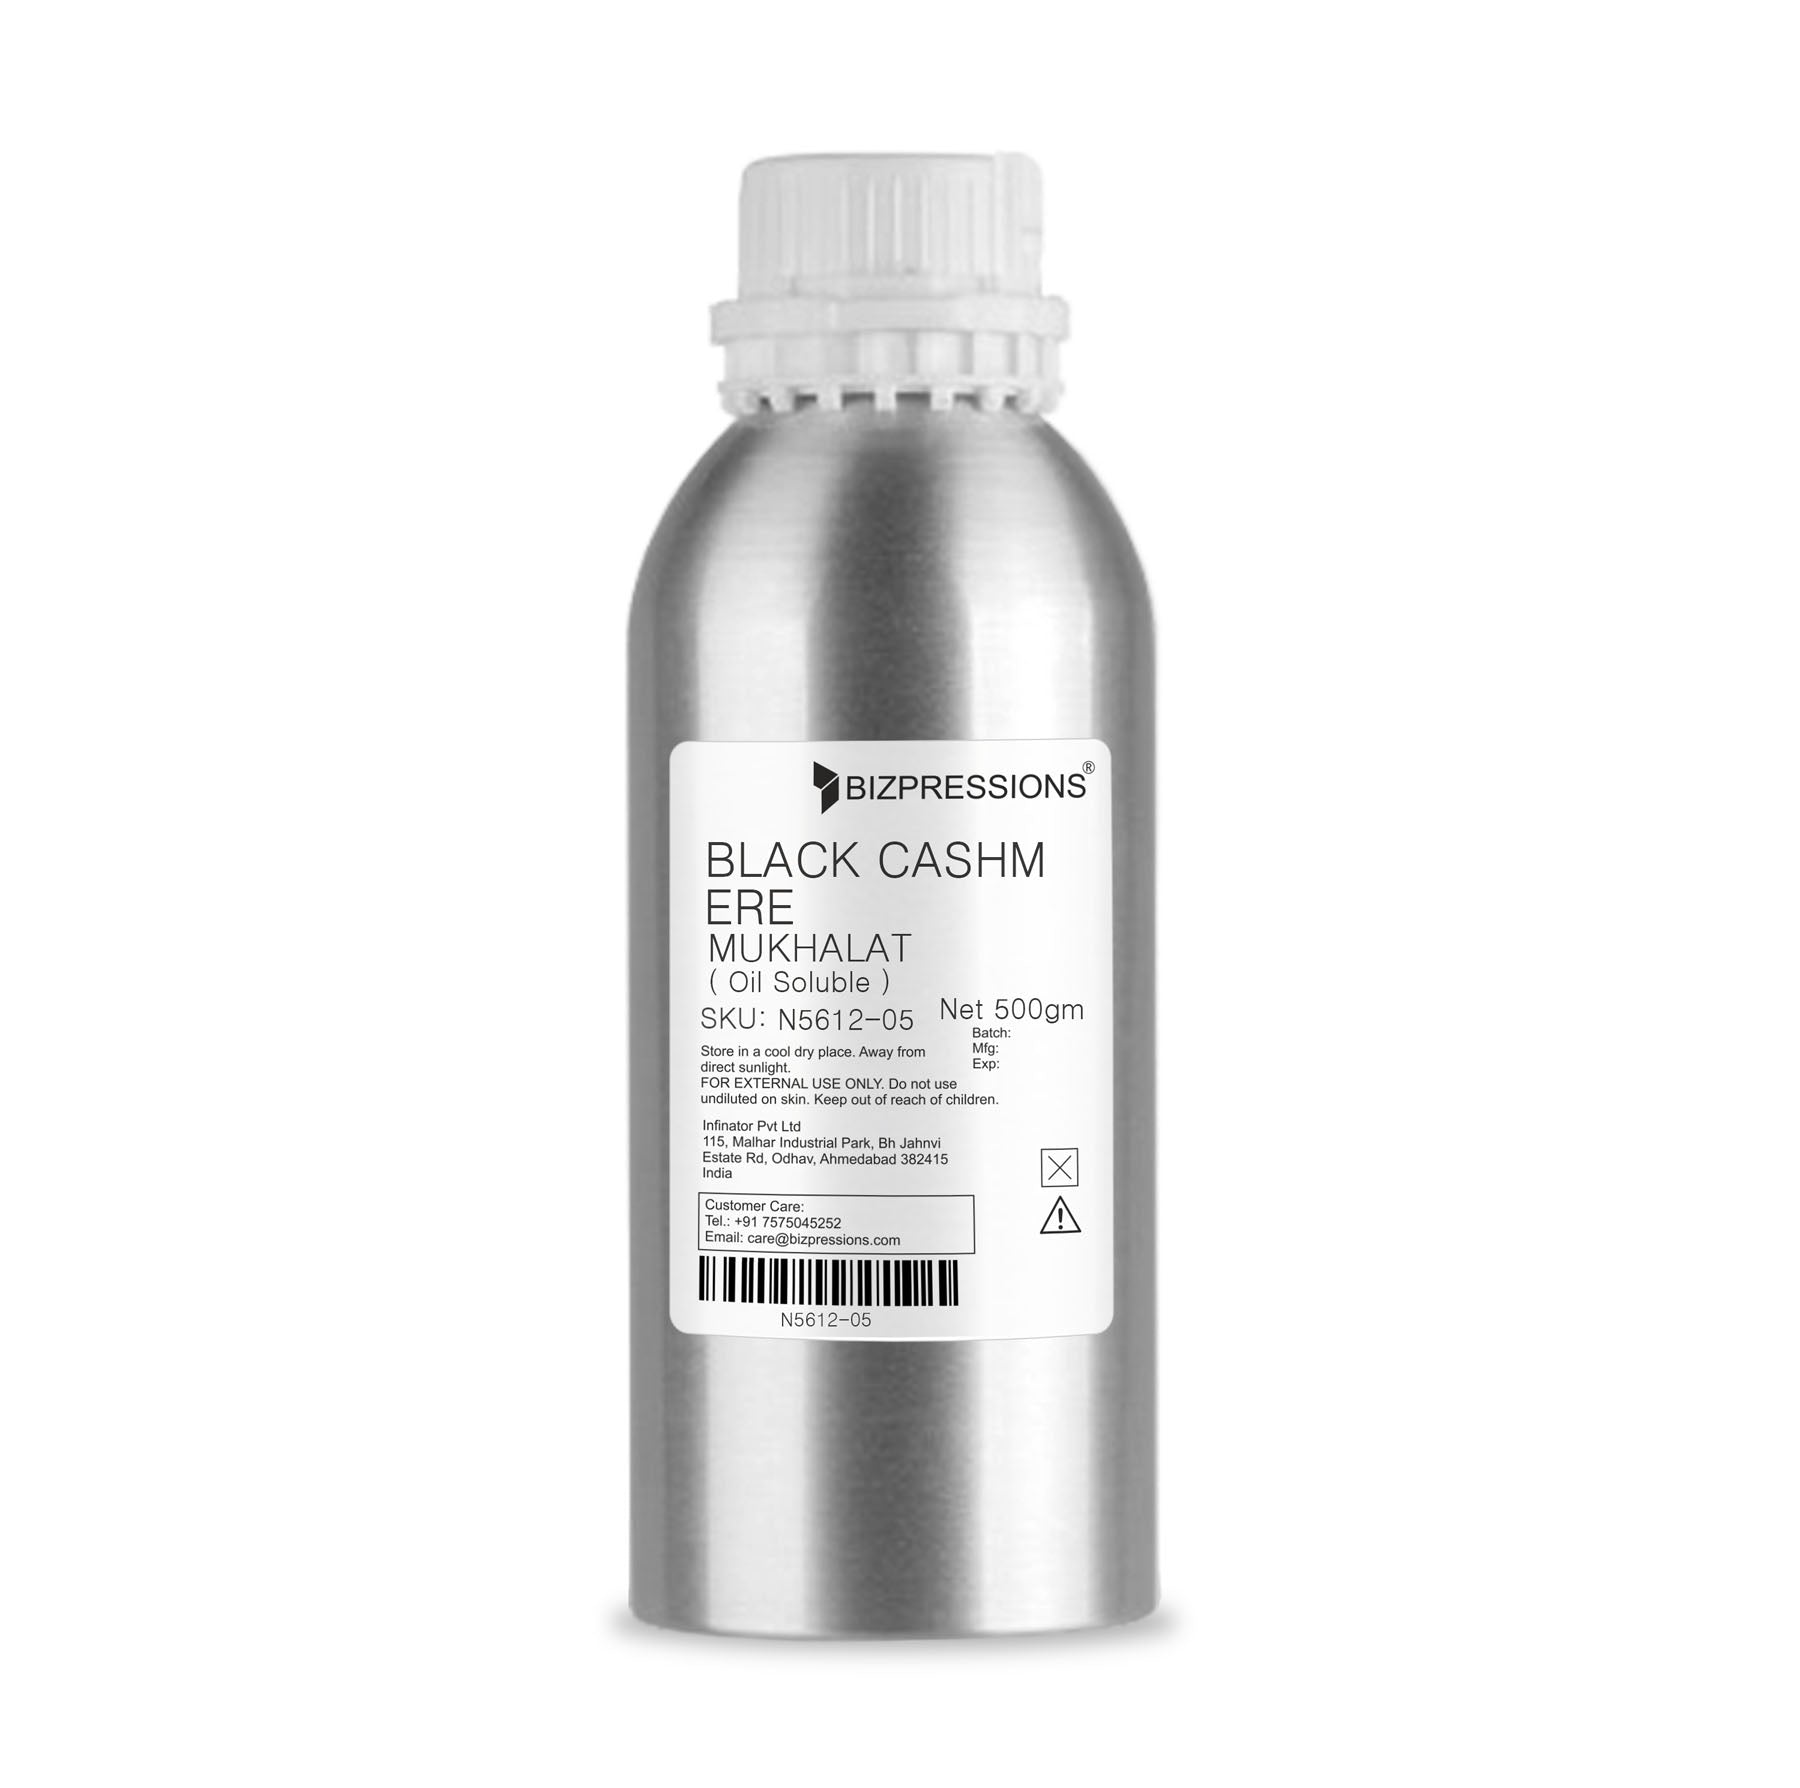 BLACK CASHMERE MUKHALAT - Fragrance ( Oil Soluble ) - 500 gm